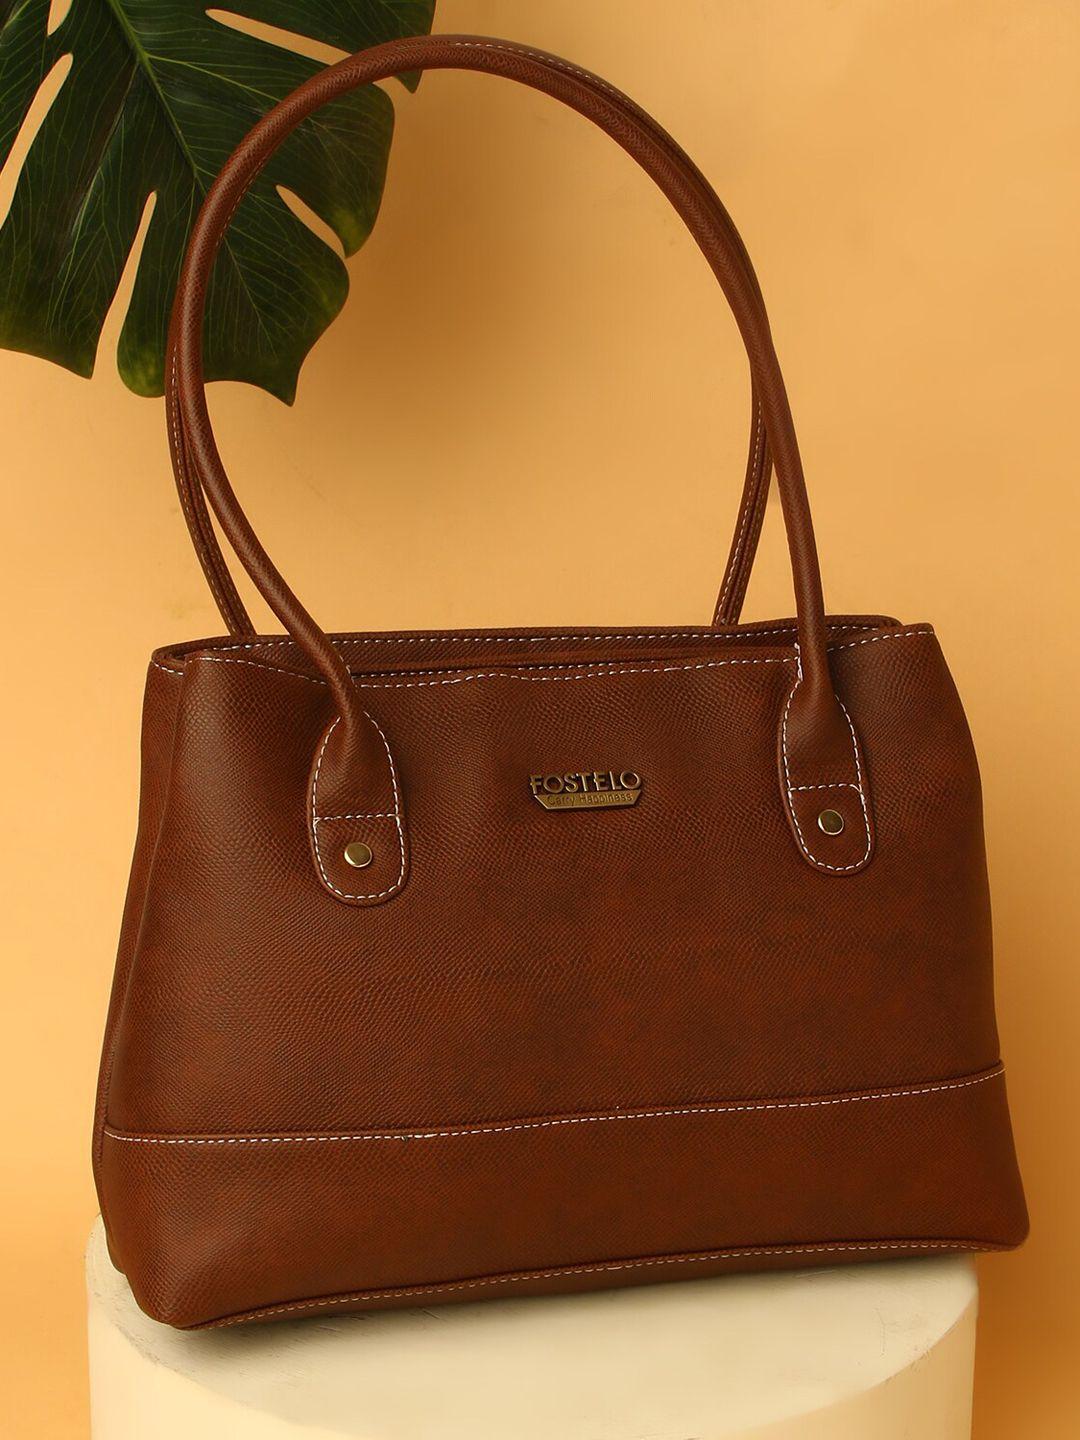 fostelo brown structured handheld bag